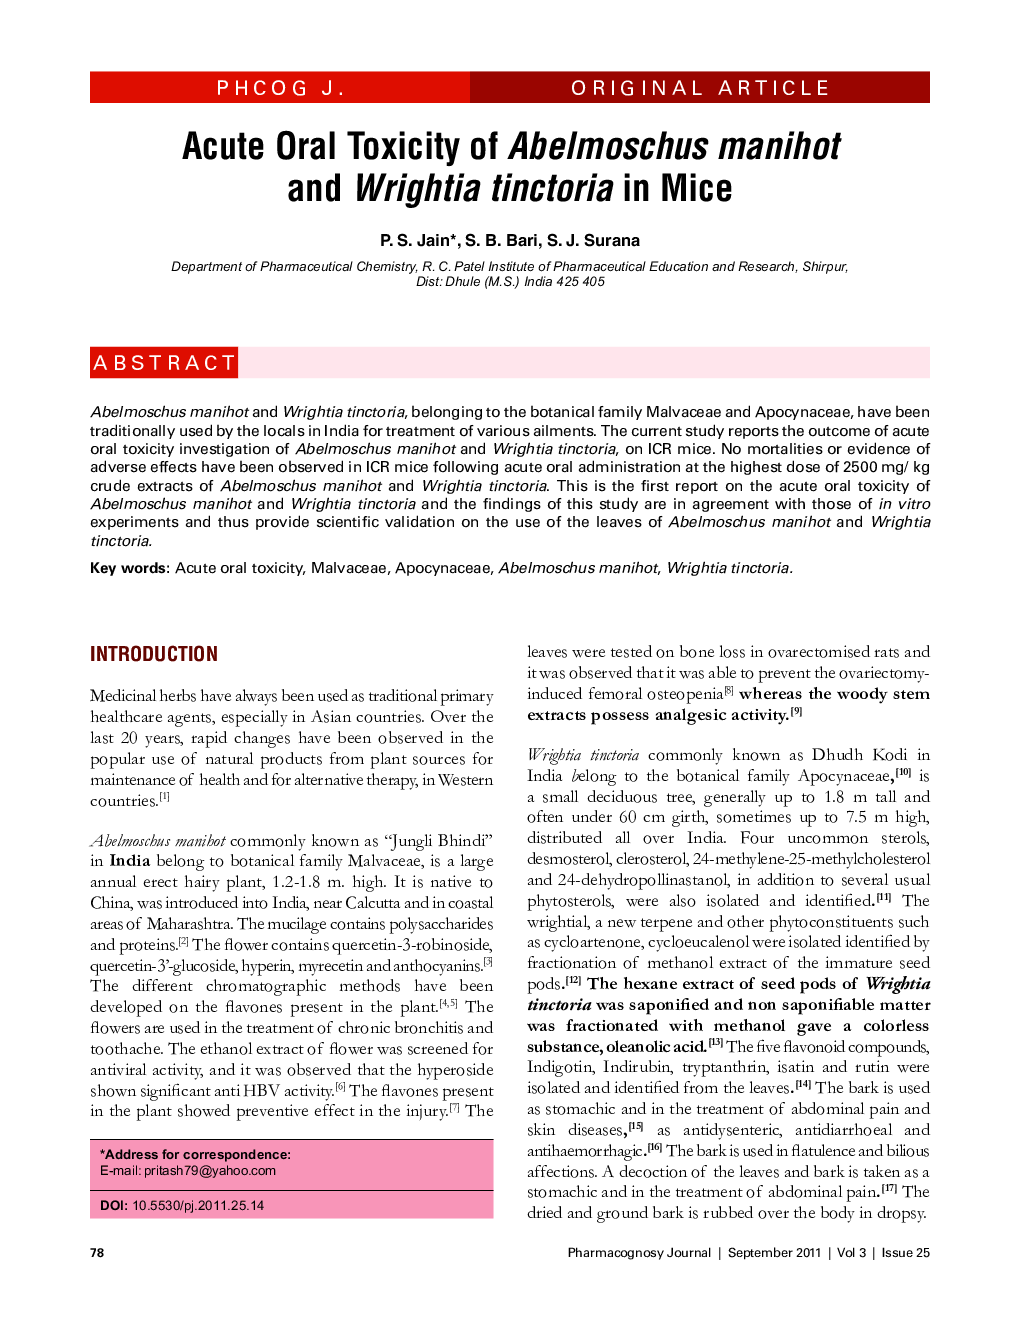 Acute Oral Toxicity of Abelmoschus manihot and Wrightia tinctoria in Mice